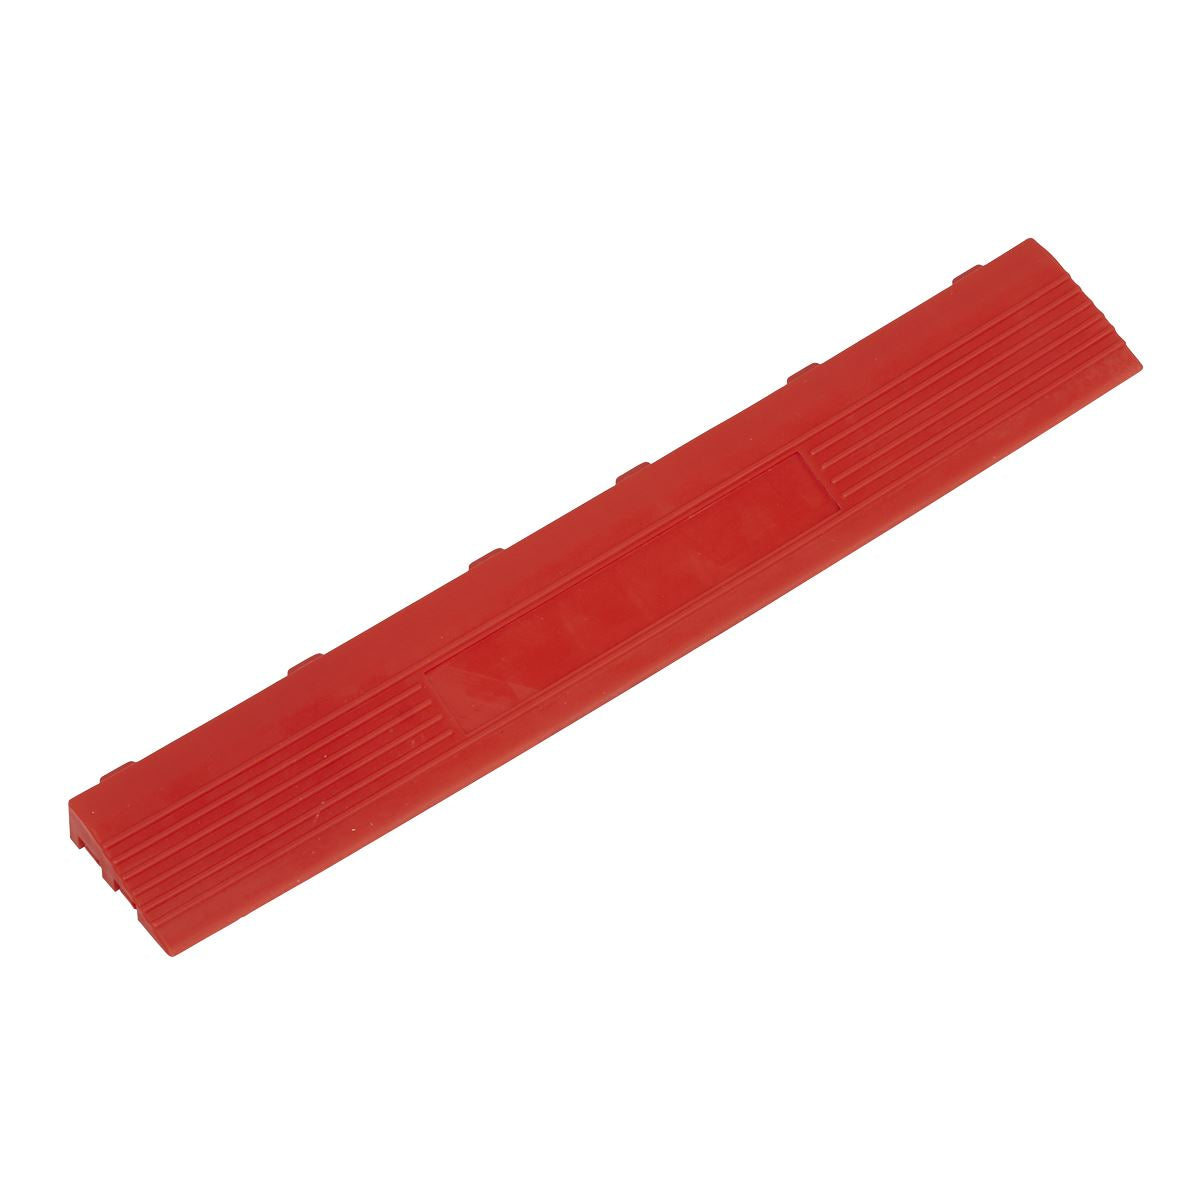 Sealey Polypropylene Floor Tile Edge 400 x 60mm Red Female - Pack of 6